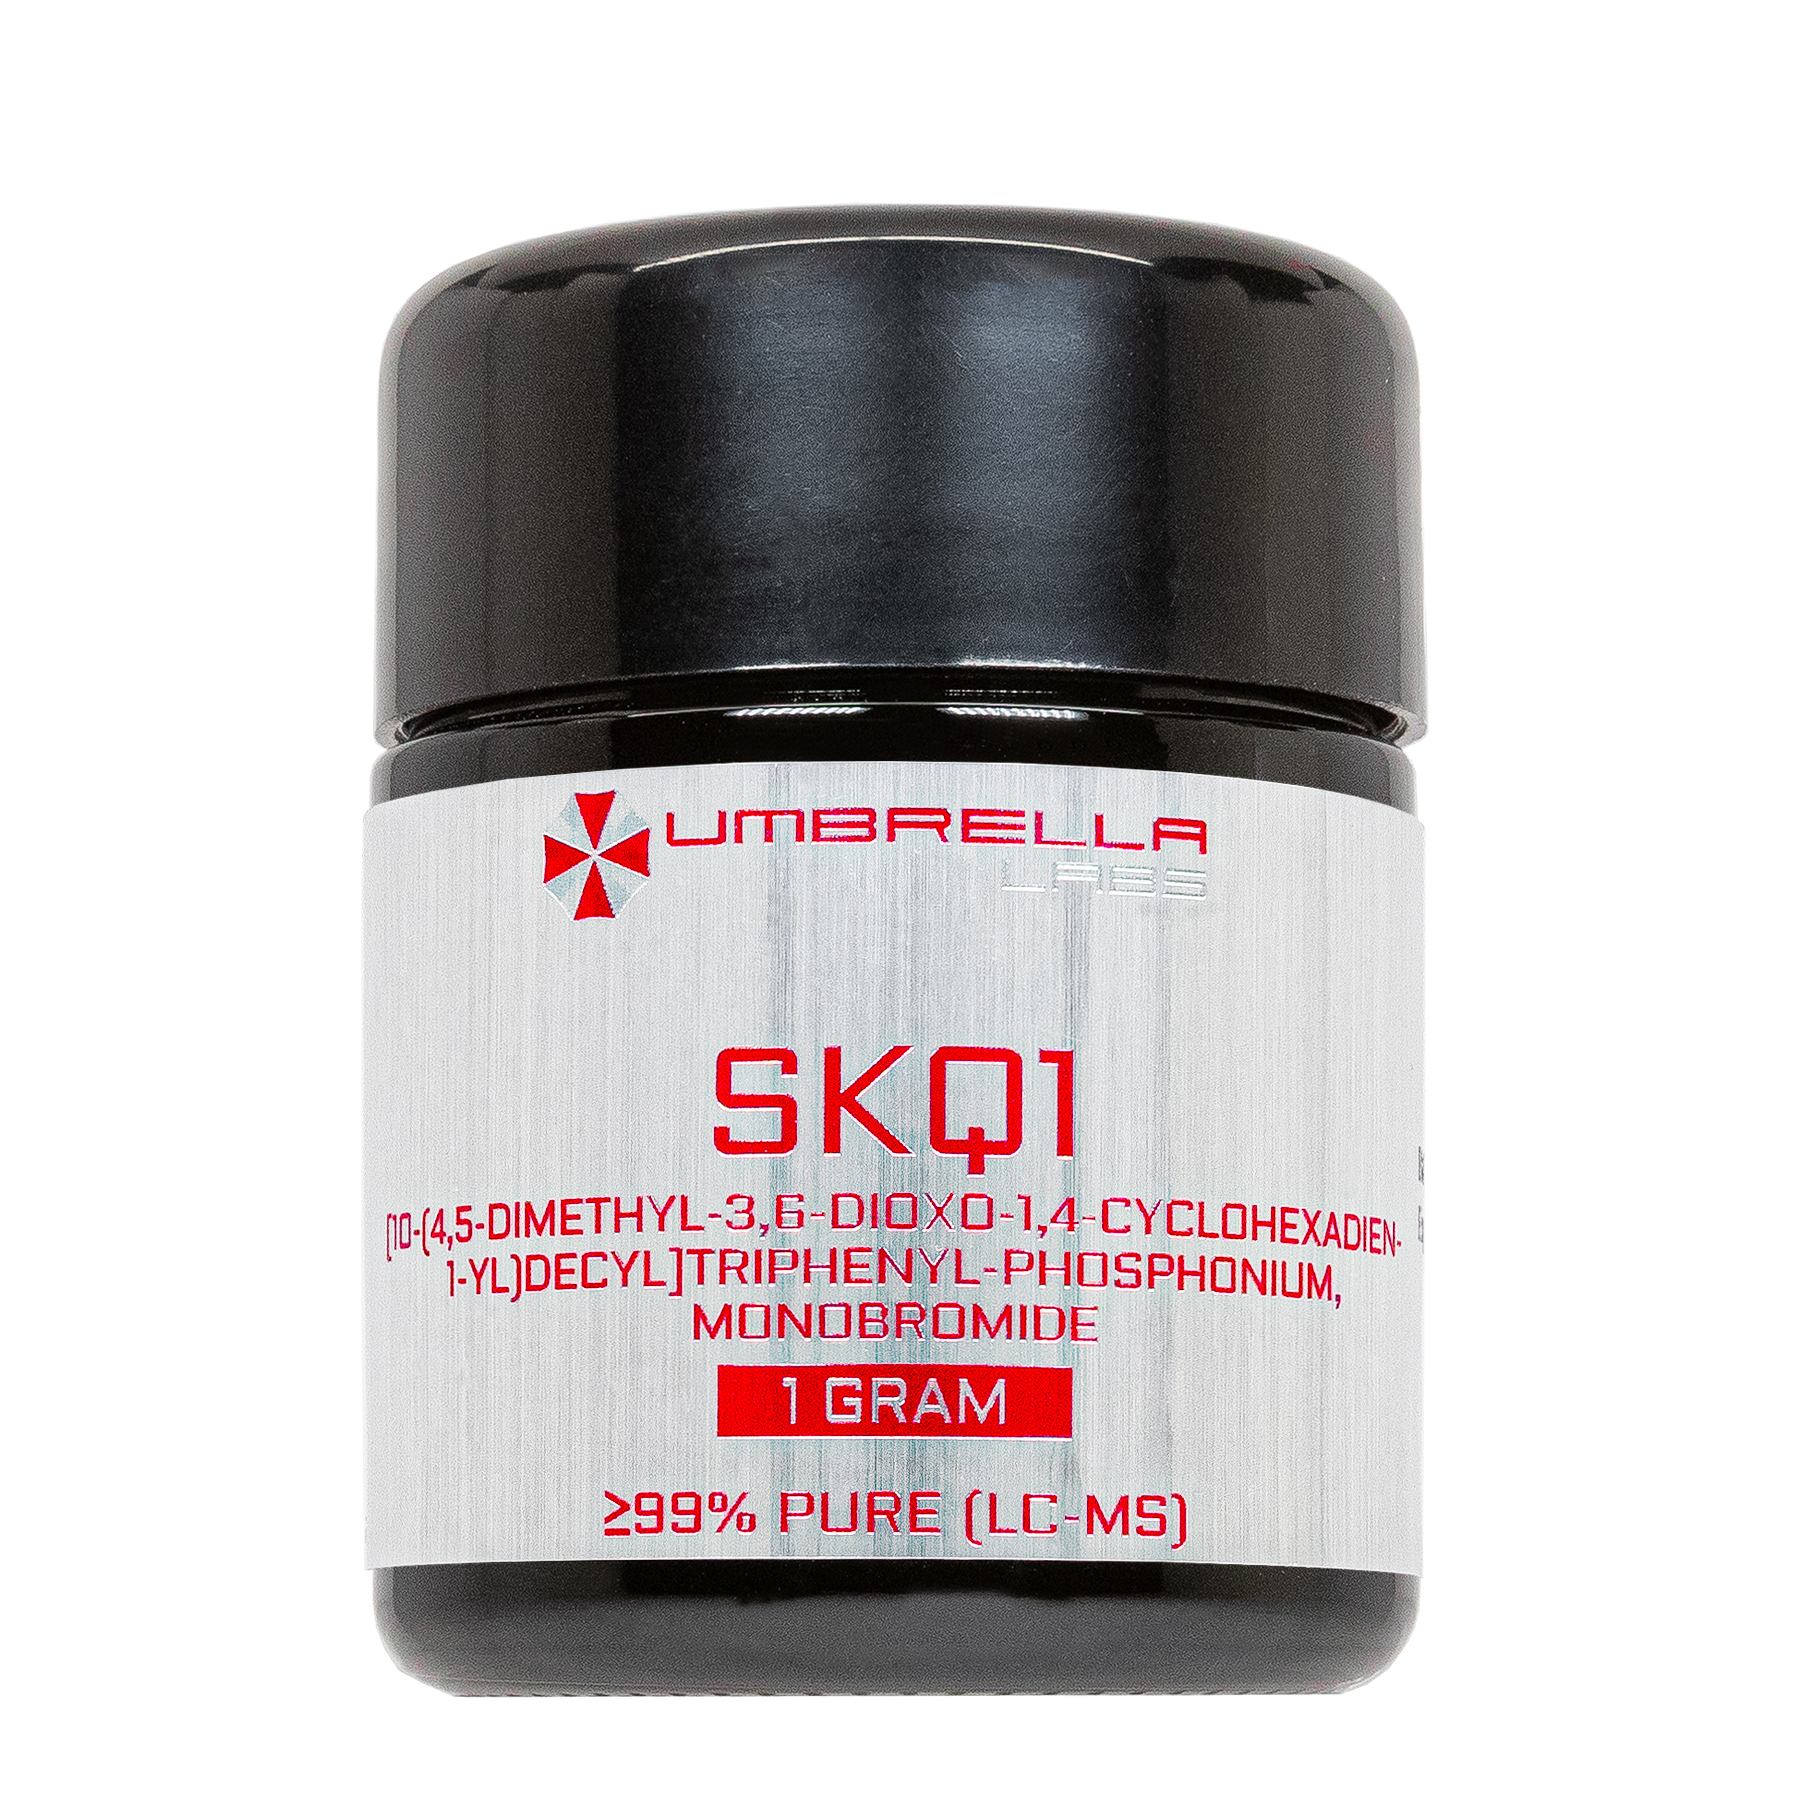 skq1 powder (1 gram)